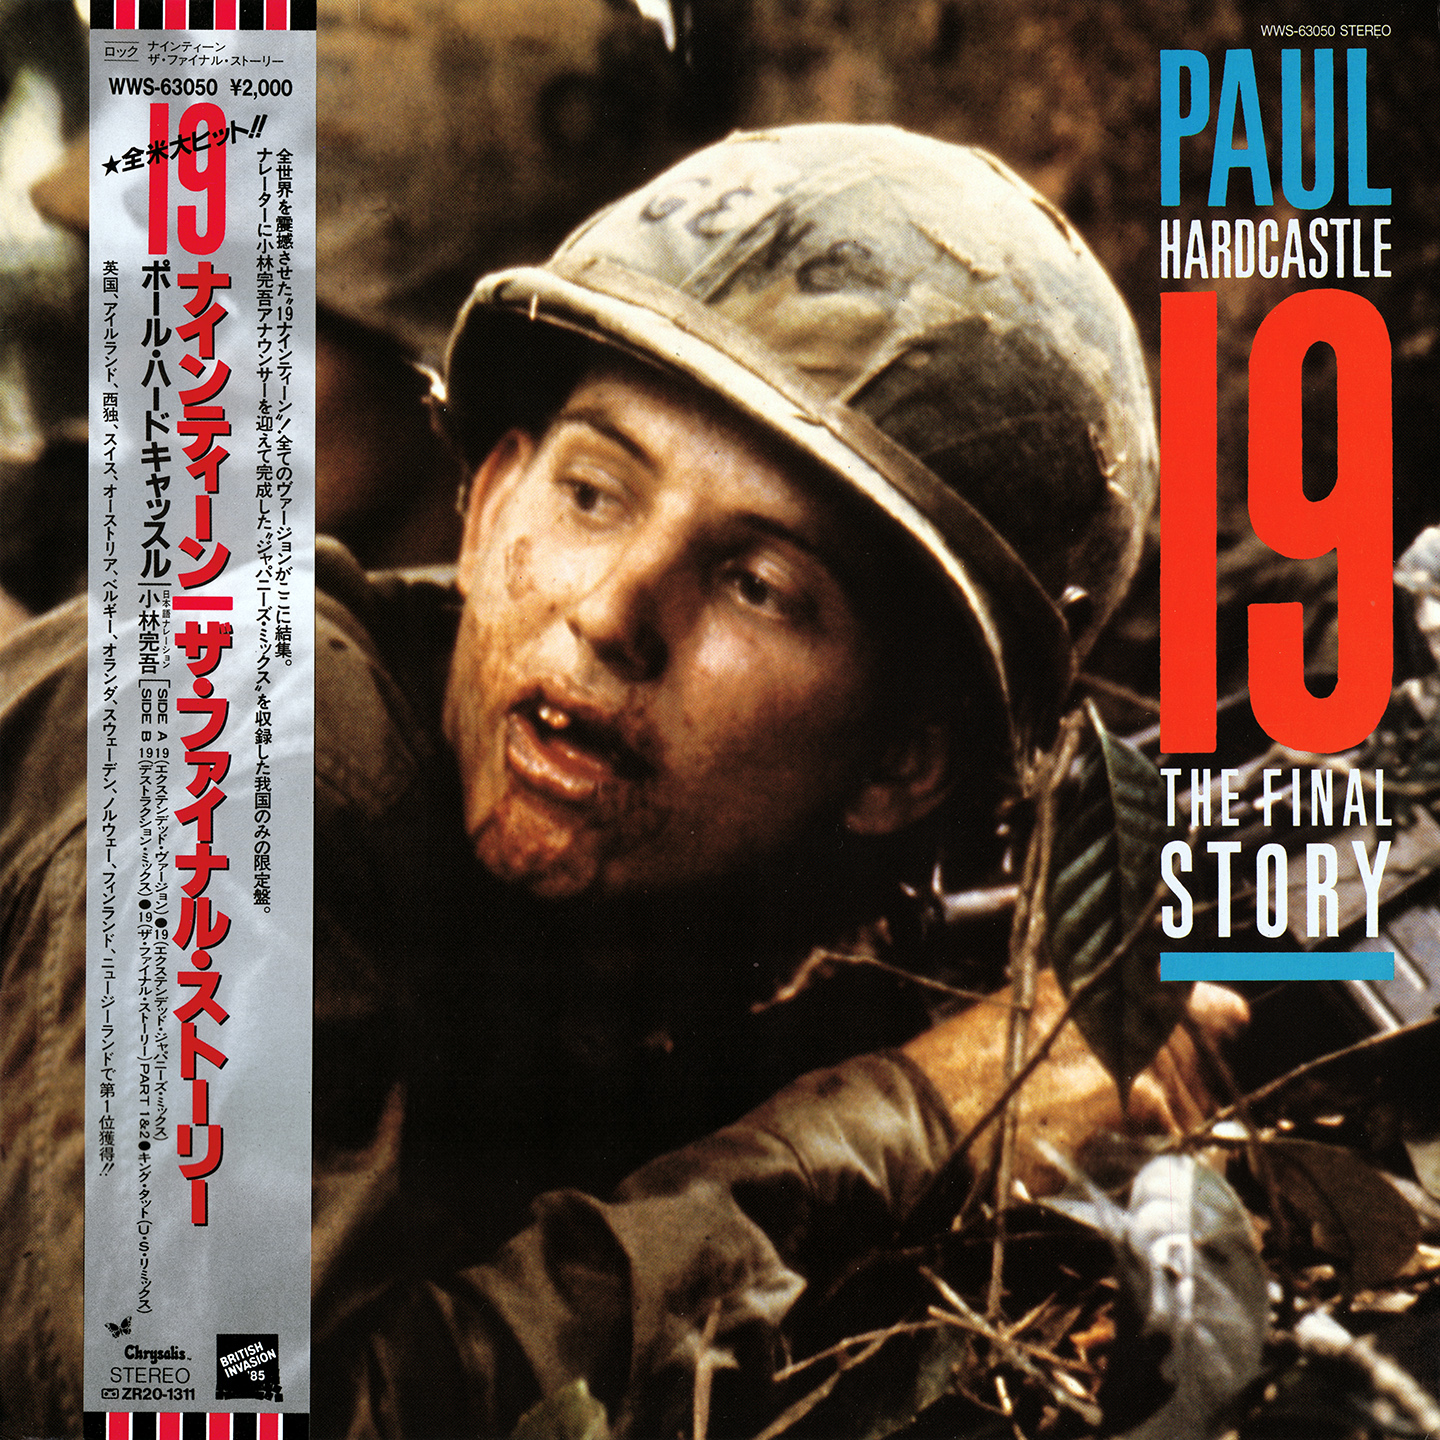 Paul hardcastle. Paul Hardcastle 19. Paul Hardcastle 1985. Paul Hardcastle nineteen. Paul Hardcastle - 19 - Destruction Mix.